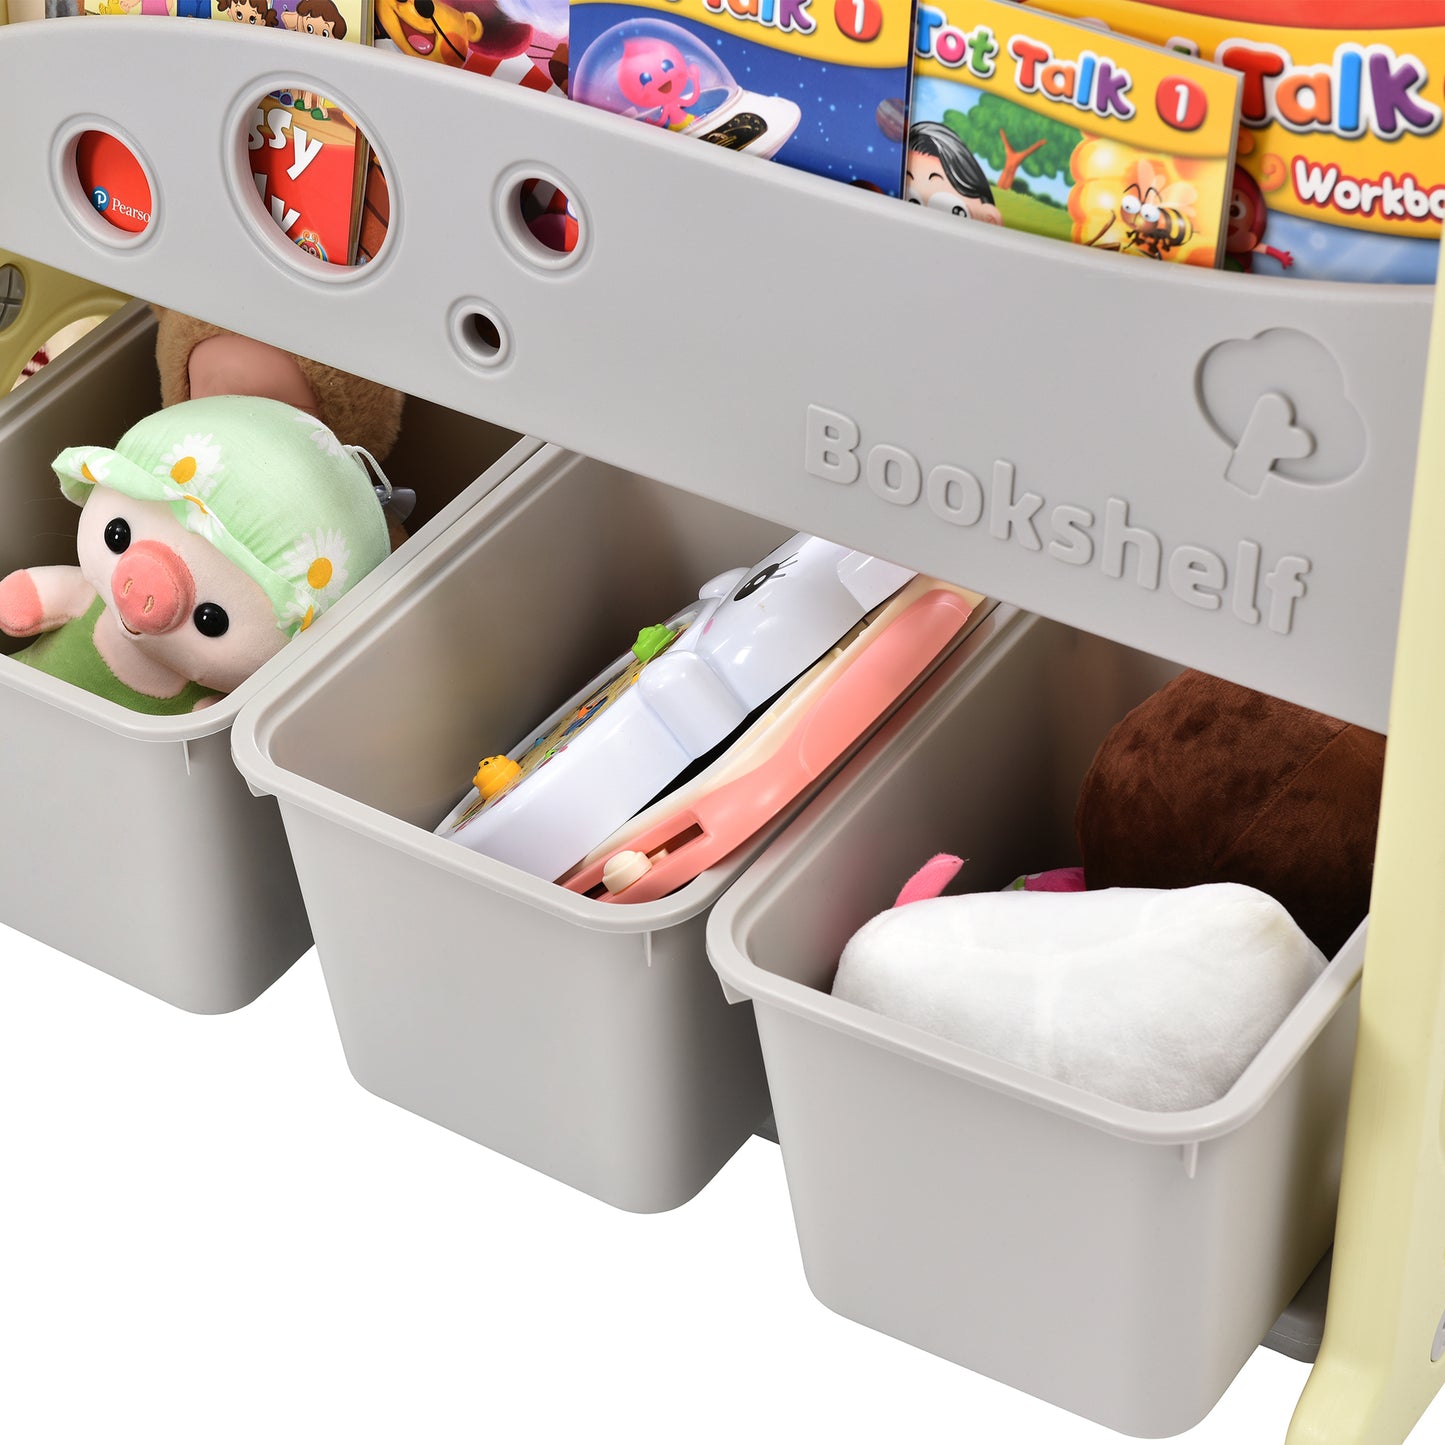 Kids Bookshelf Toy Storage Organizer with 12 Bins and 4 Bookshelves, Multi-functional Nursery Organizer Kids Furniture Set Toy Storage Cabinet Unit with HDPE Shelf and Bins